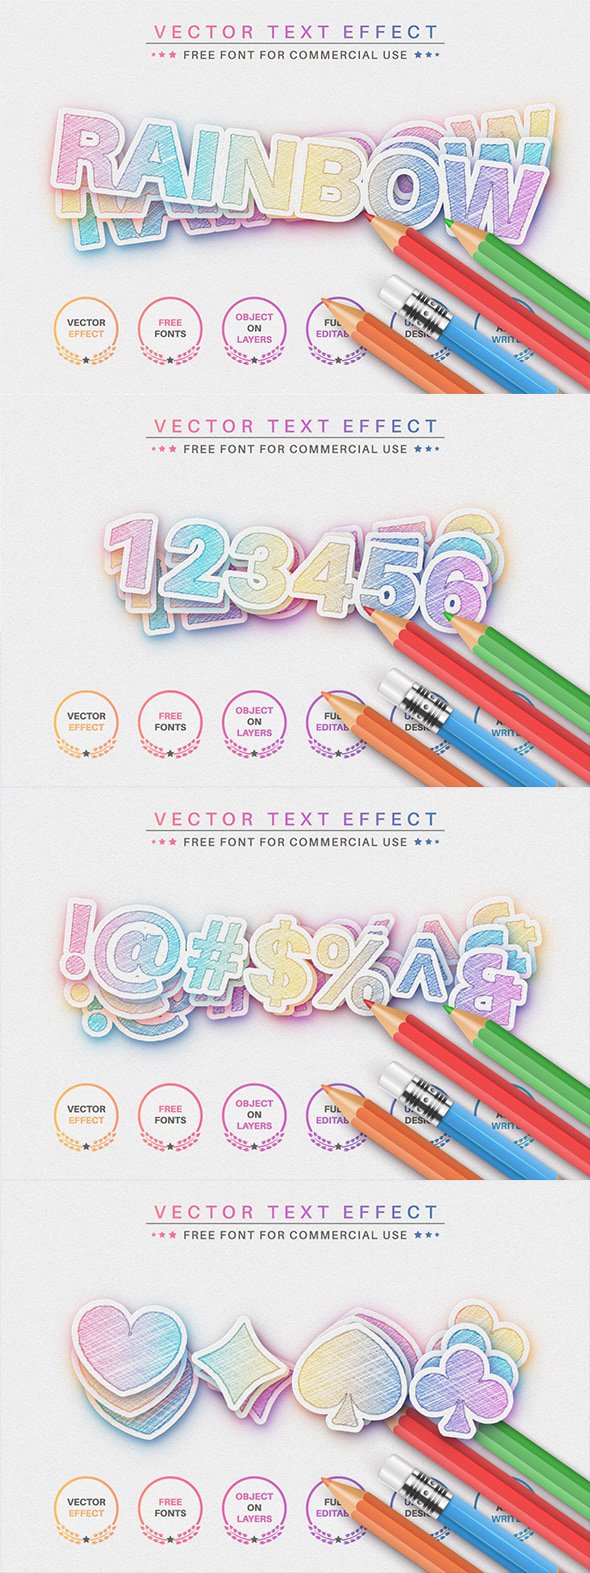 CreativeMarket - Unicorn Sticker Editable Text Effect - 6831278